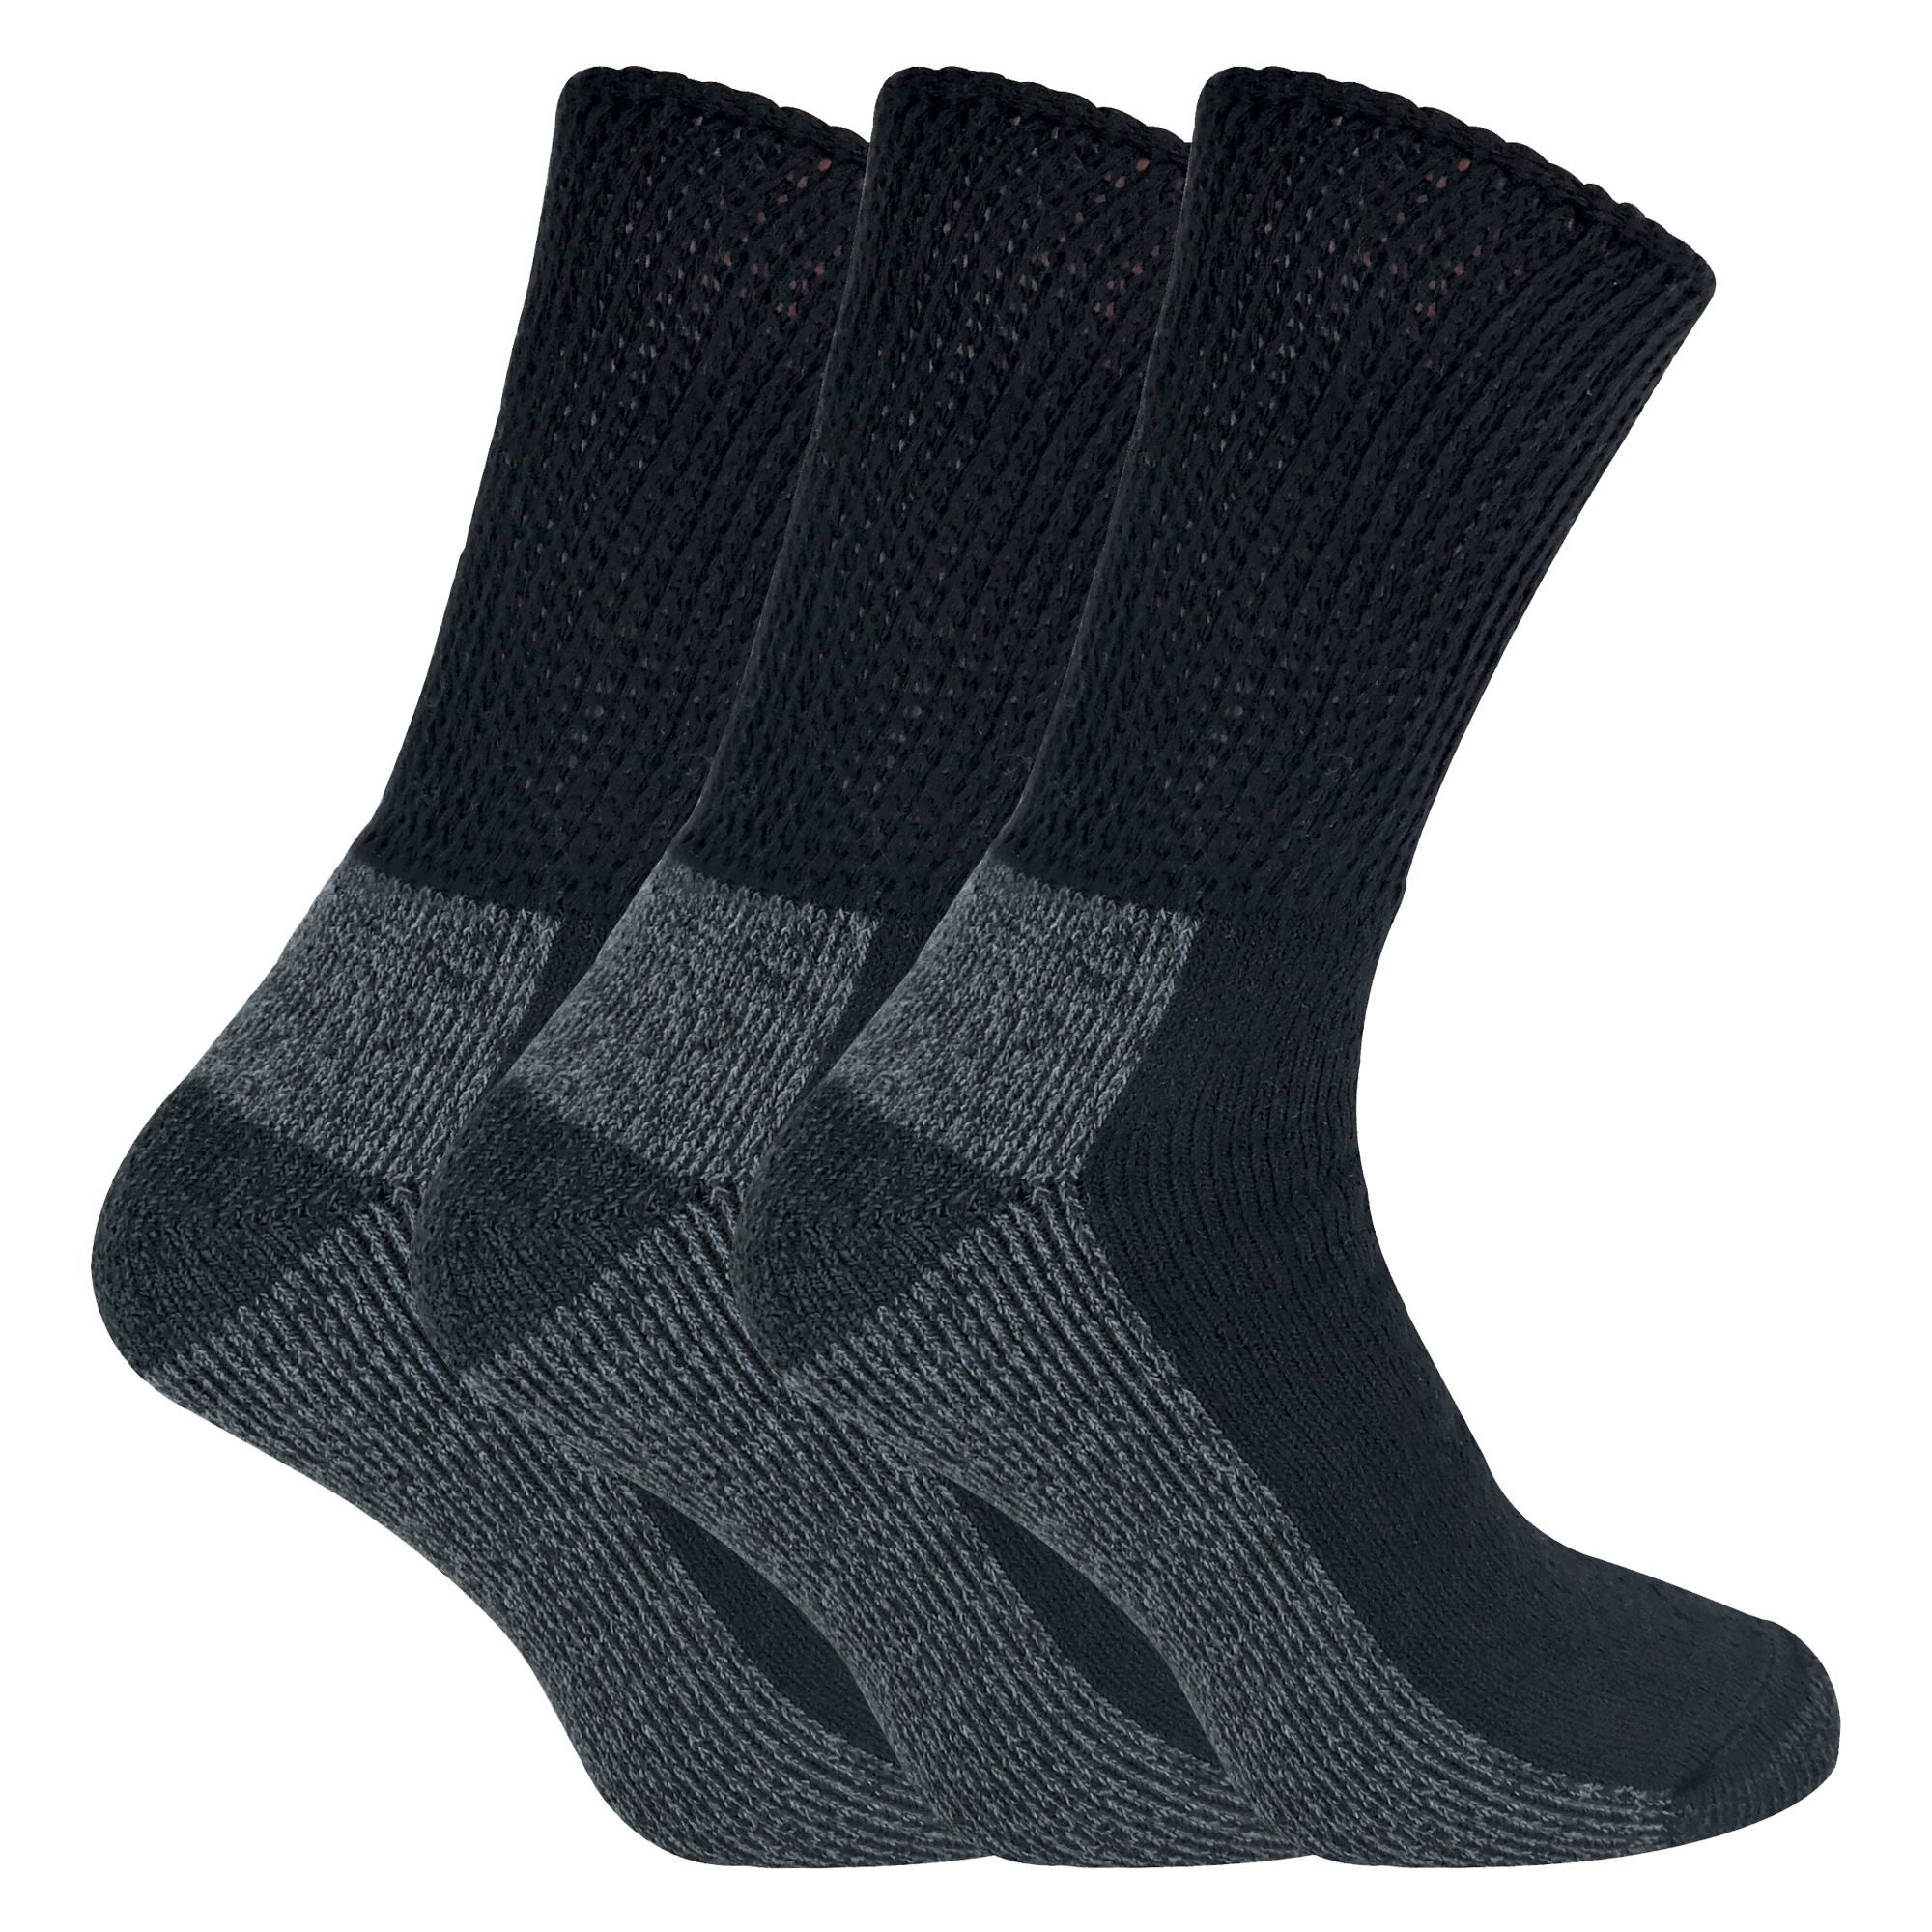 IOMI - 3 Pairs Extra Wide Heavy Duty Cotton Diabetic Work Socks